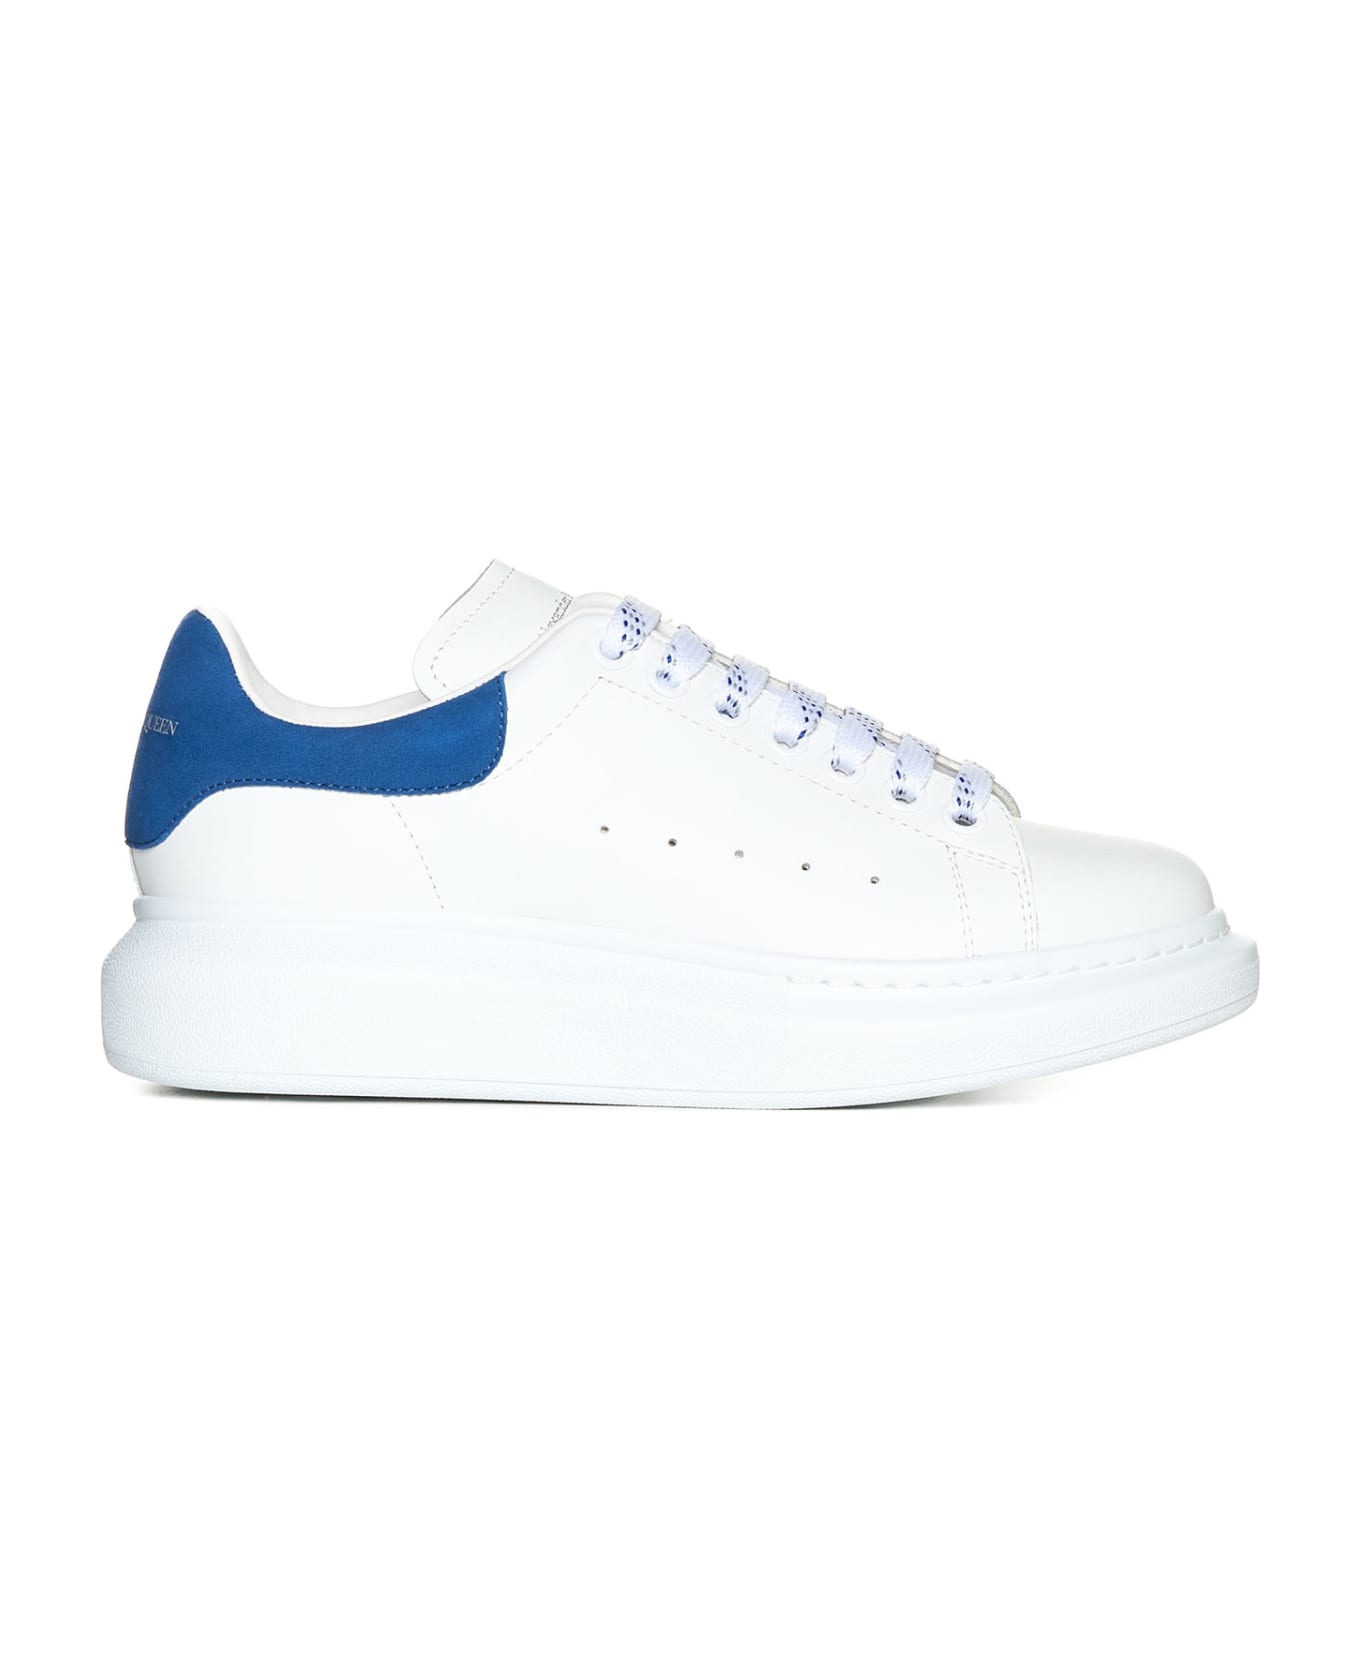 Alexander McQueen Sneakers - White paris blue 161